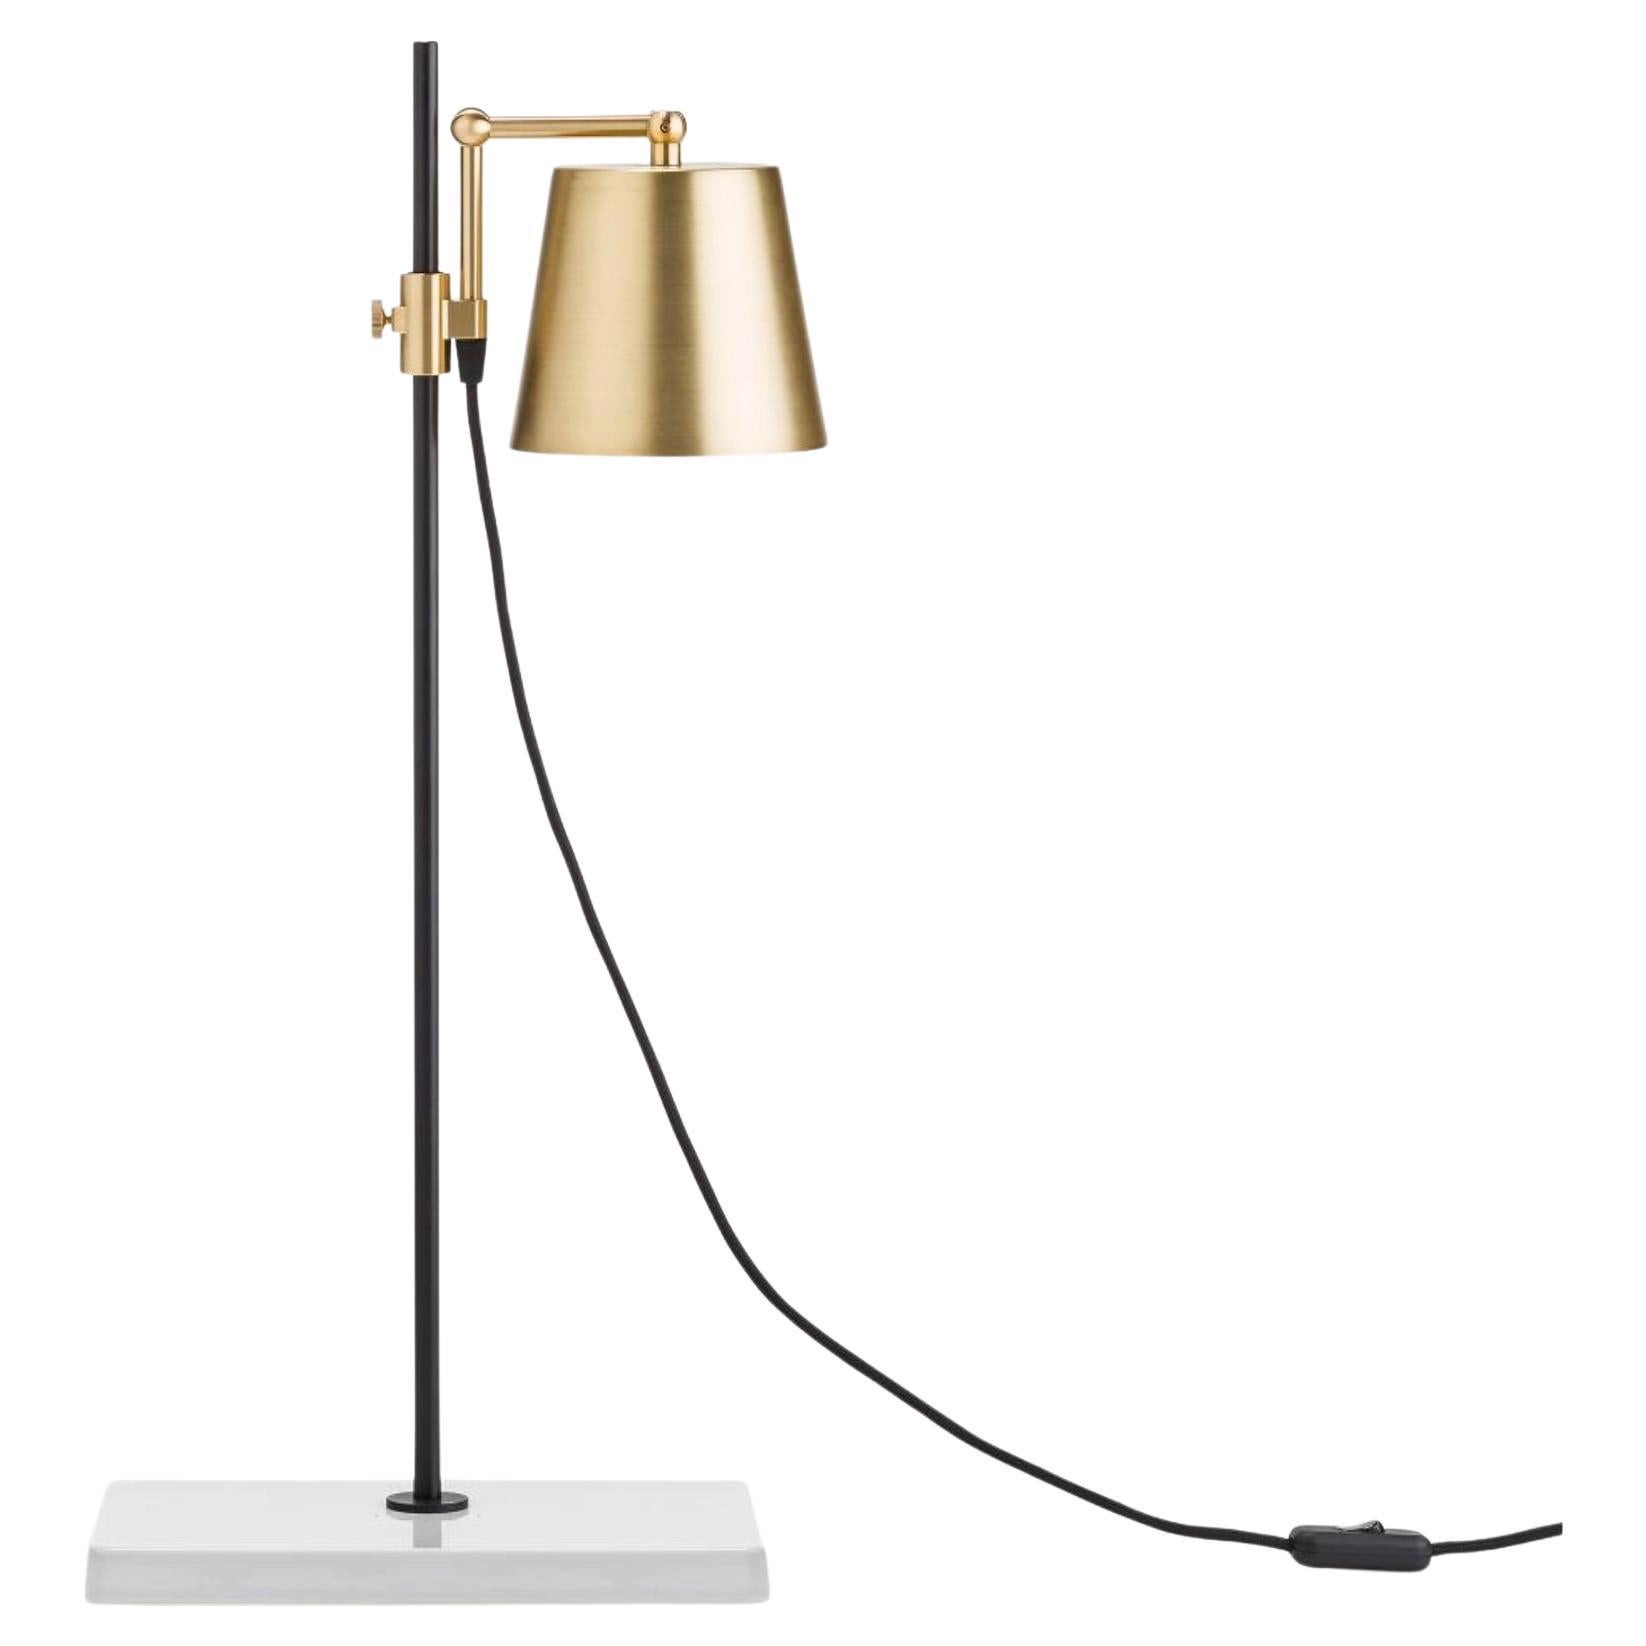 Anatomy Design 'Lab Light' Table Lamp by Karakter For Sale